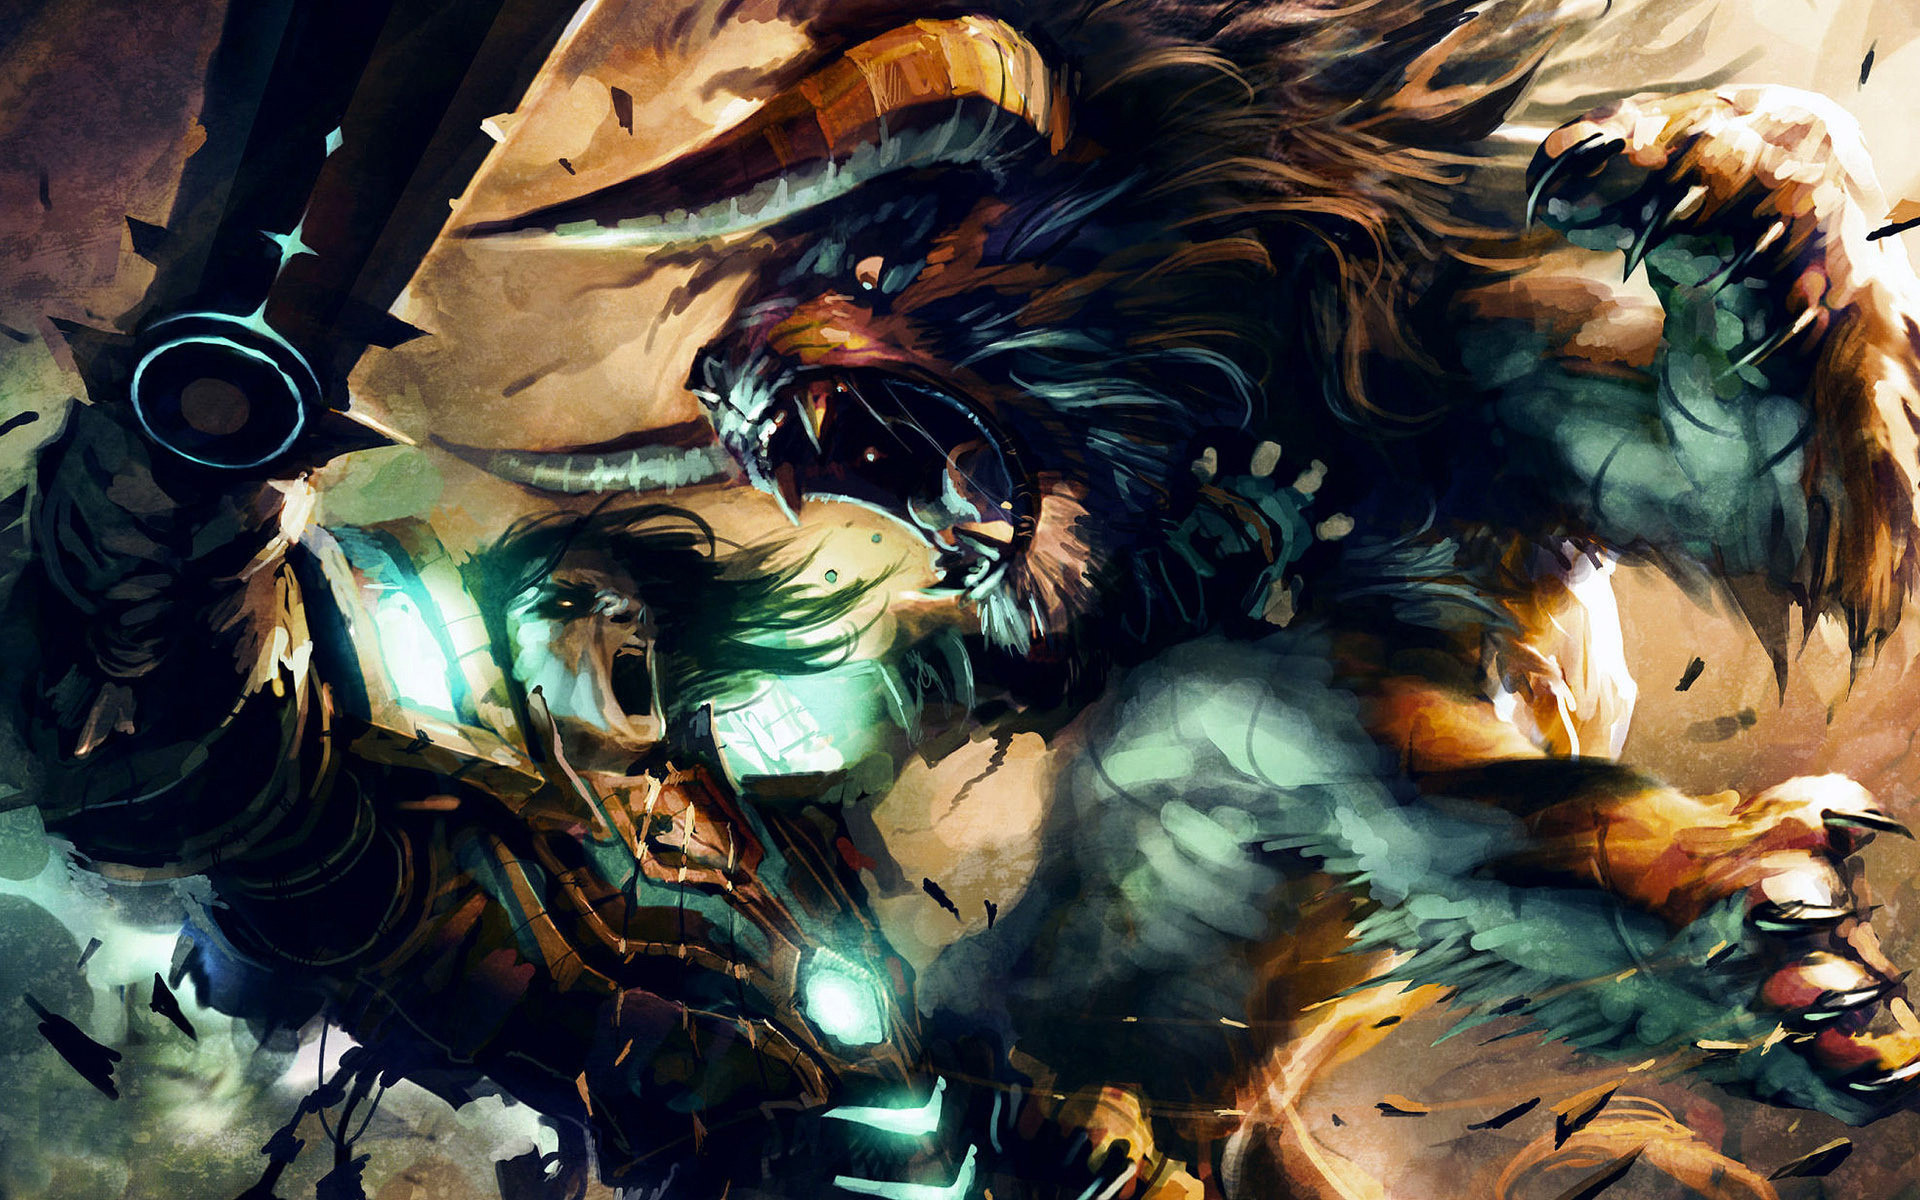 Best World Of Warcraft Night Elf Druid Transmog Image Gallery